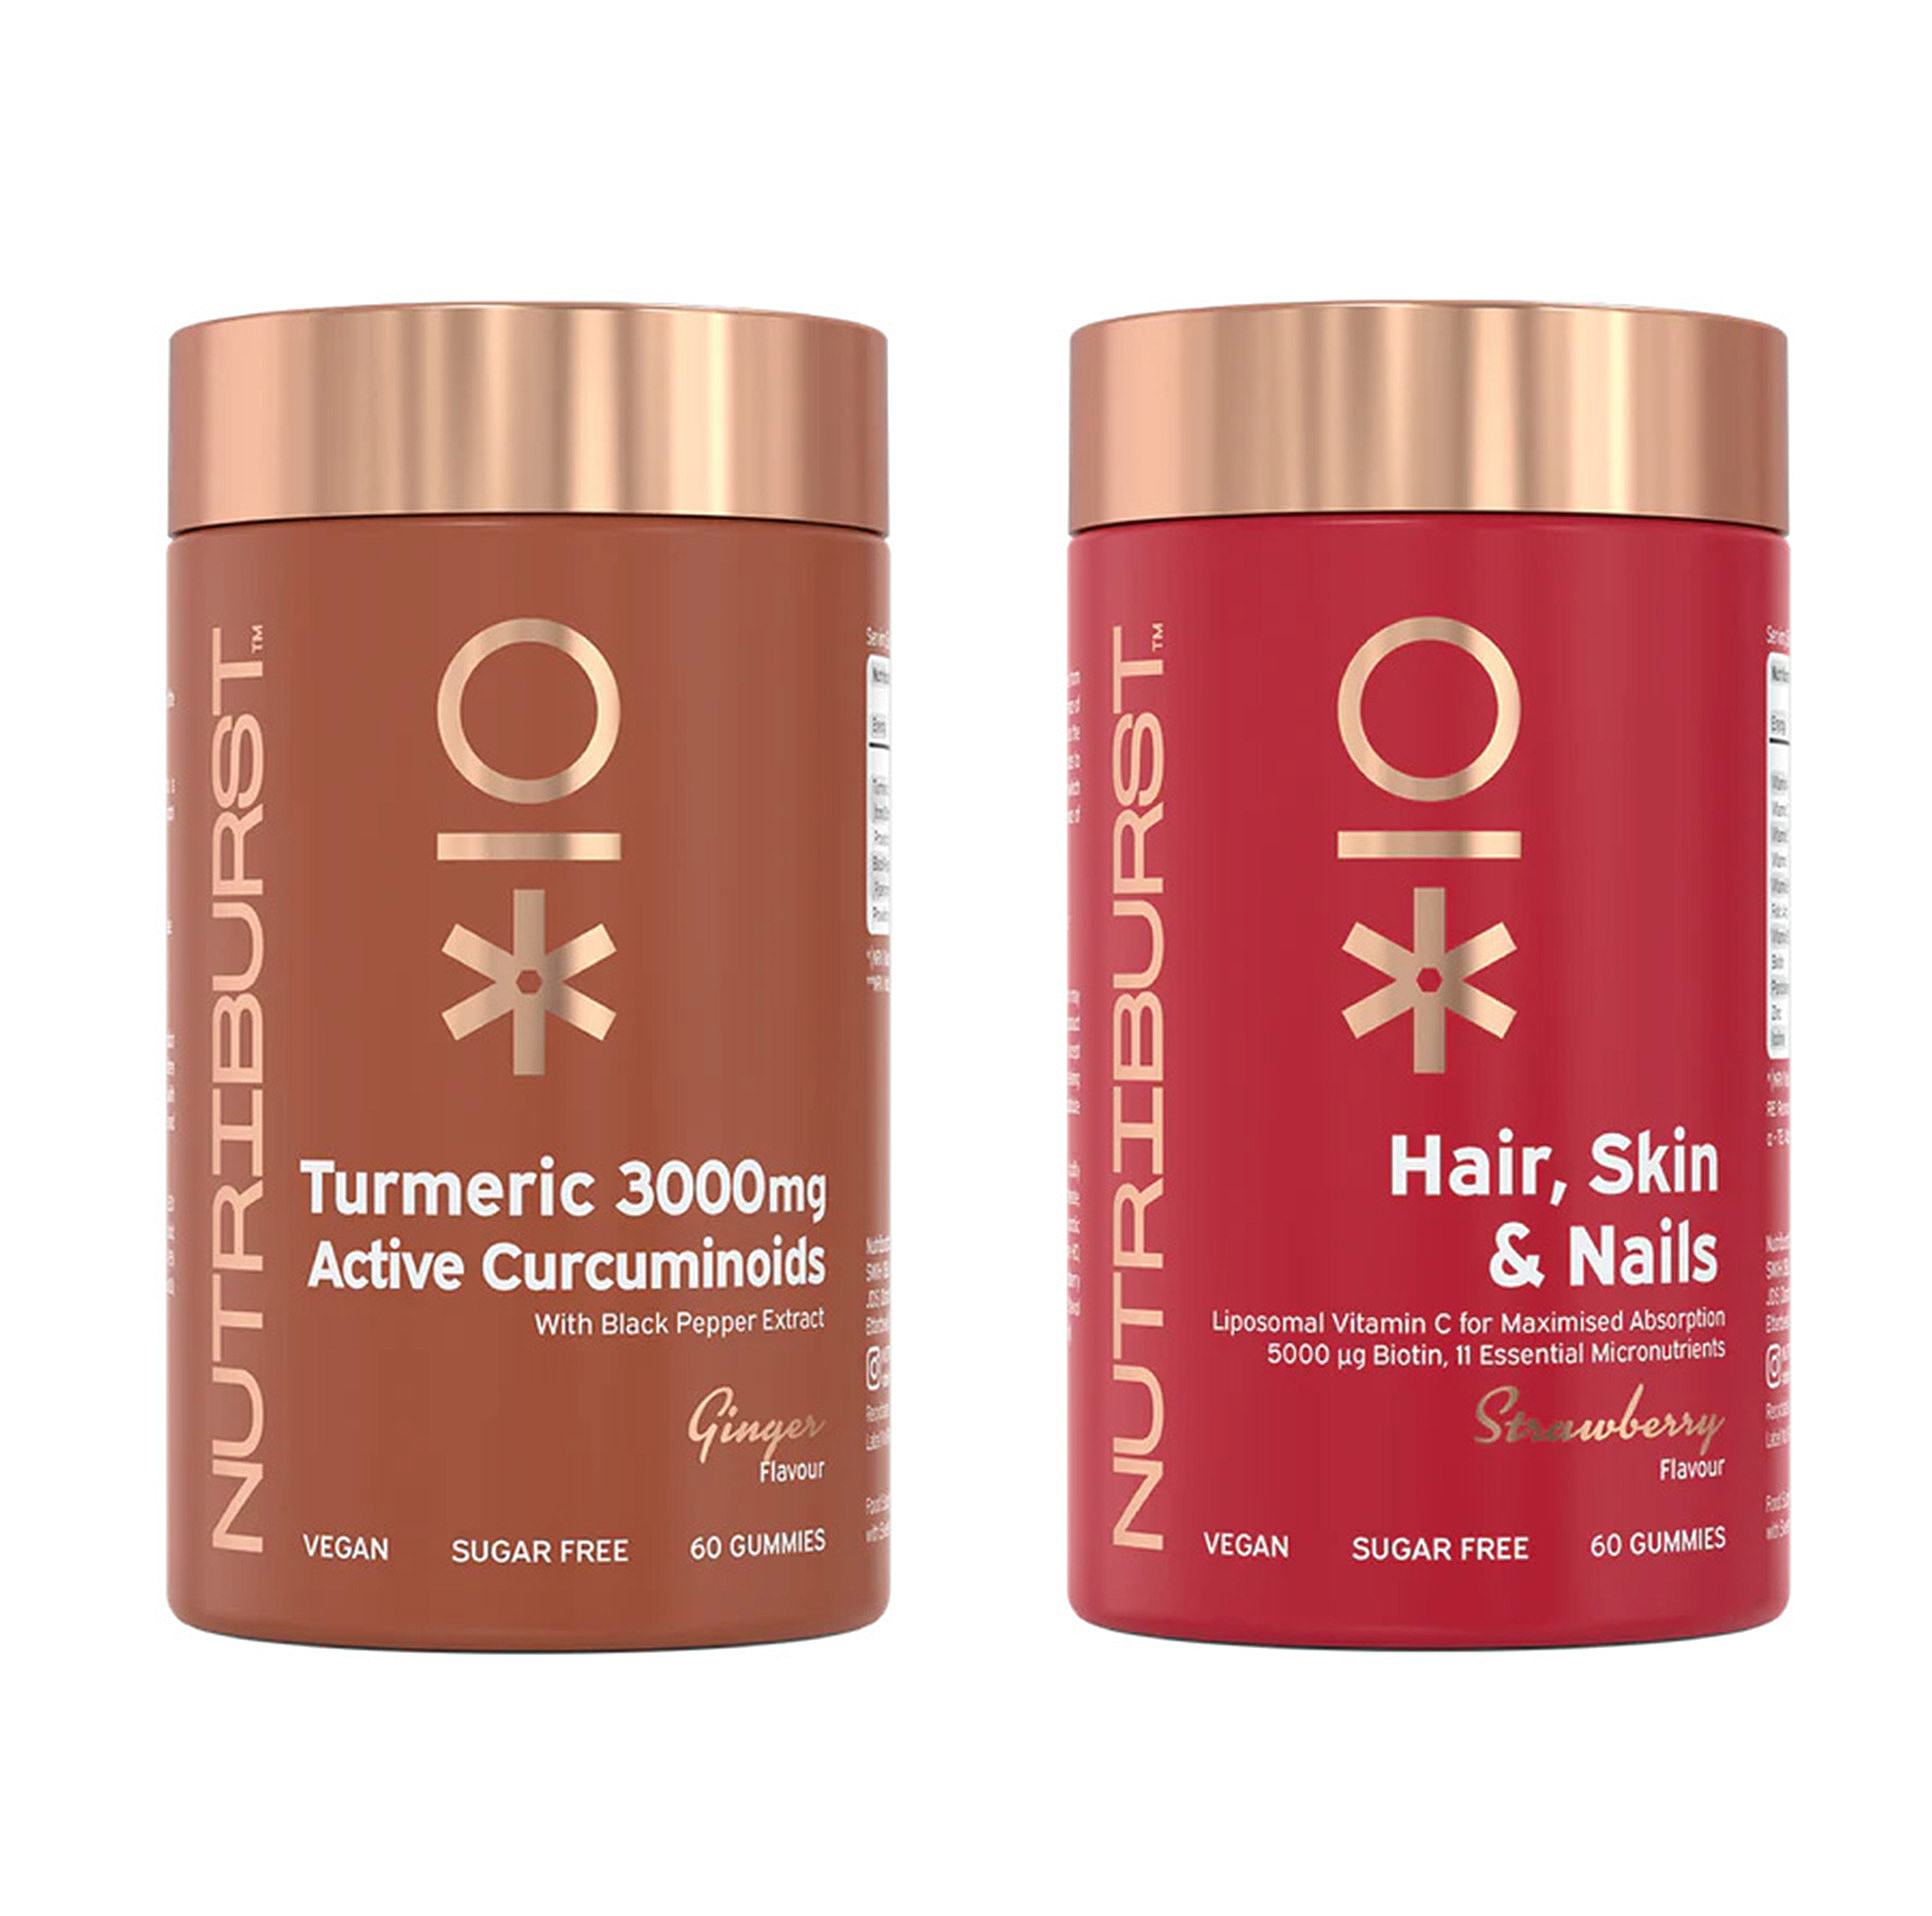 Nutriburst-Hair-Skin-and-Nails-Turmeric-Duo-Bundle-Beauty-Benefits-Agi